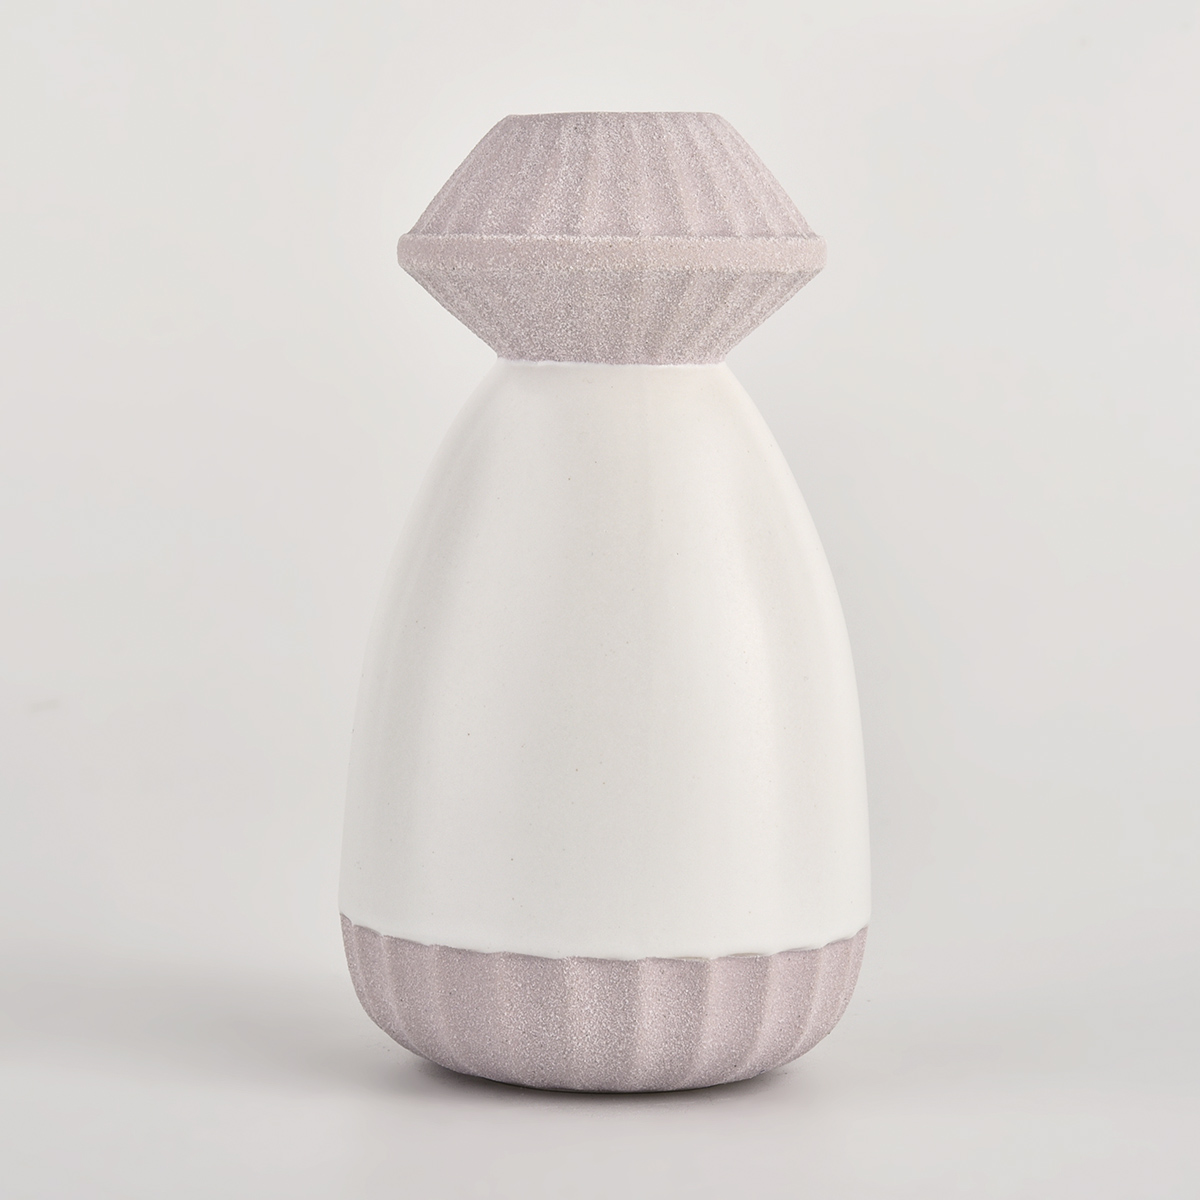 luxury aromatic ceramic diffuser bottles for home